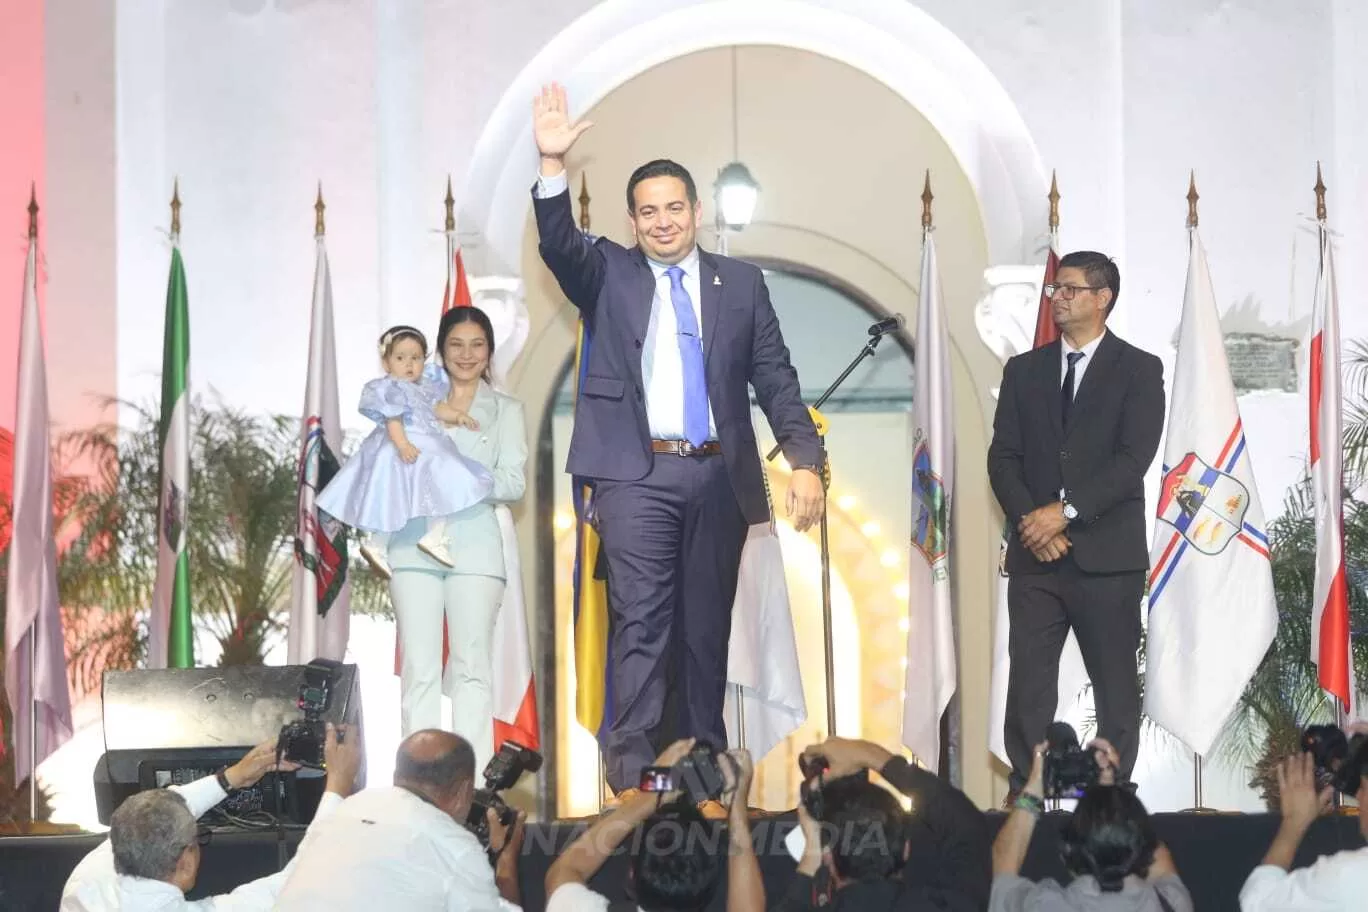 Ricardo Estigarribia takes command as governor of Central
